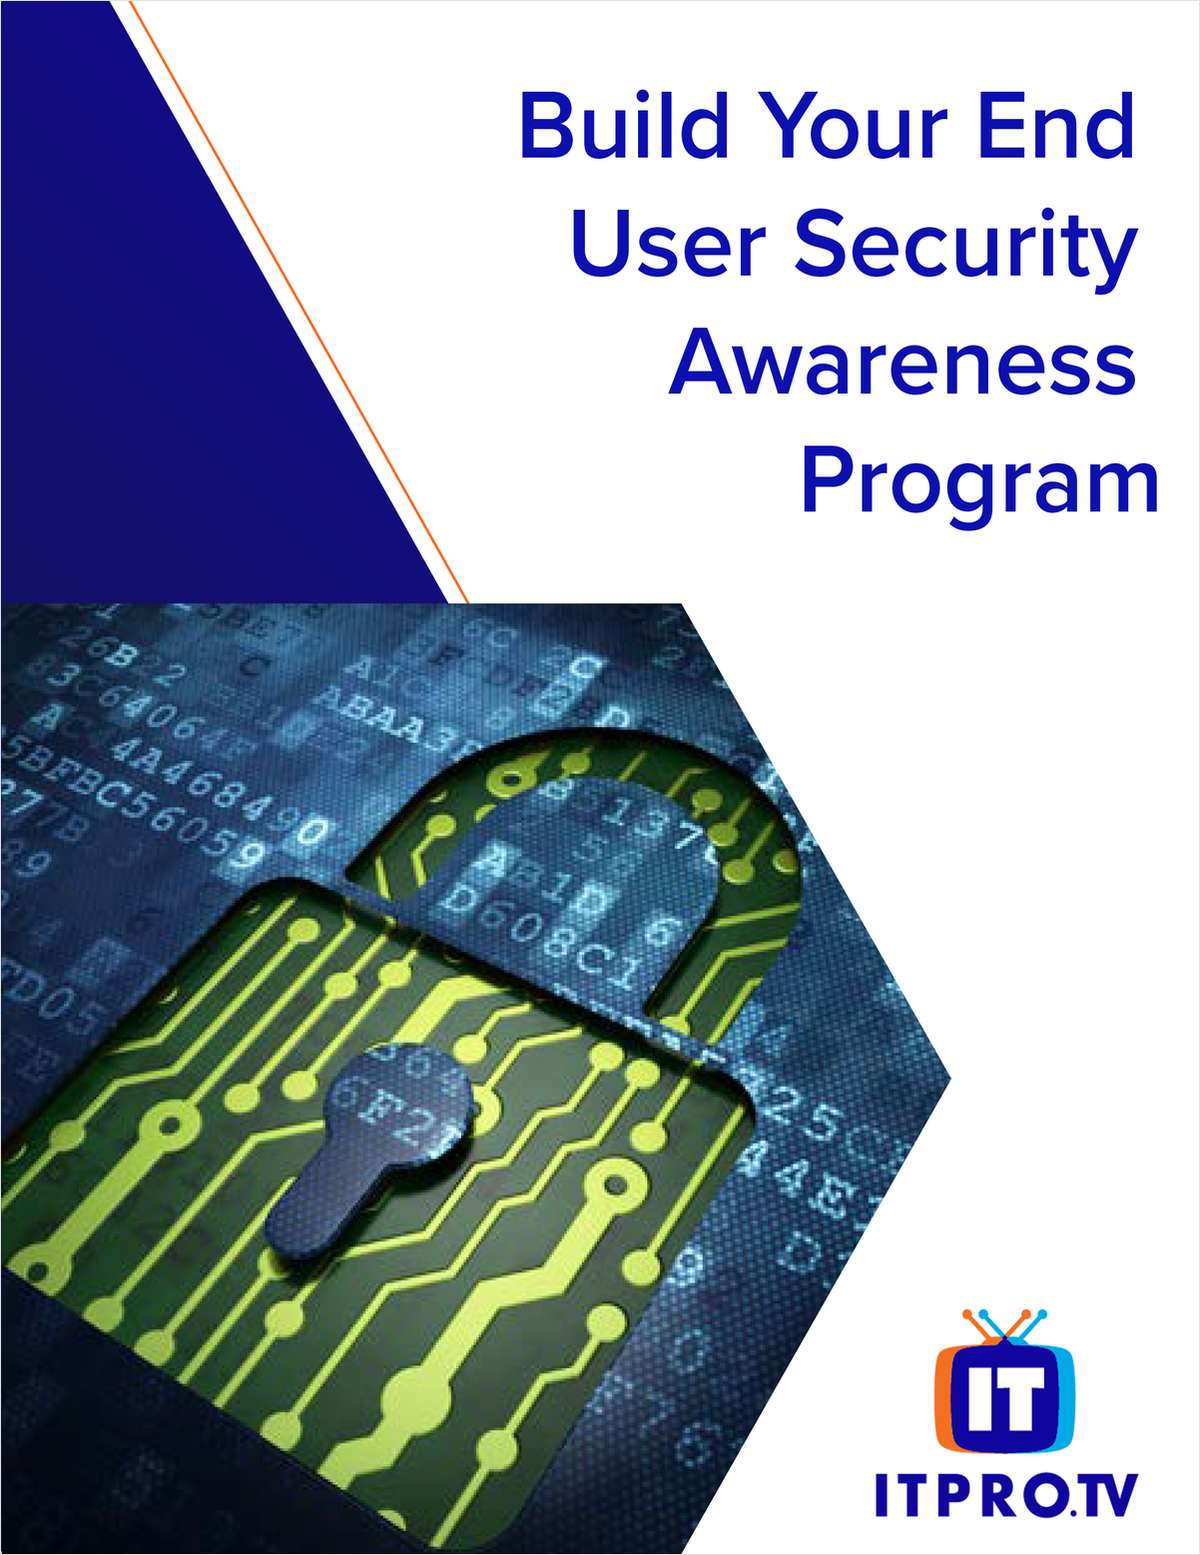 3 Ways to Build Your End User Security Awareness Program